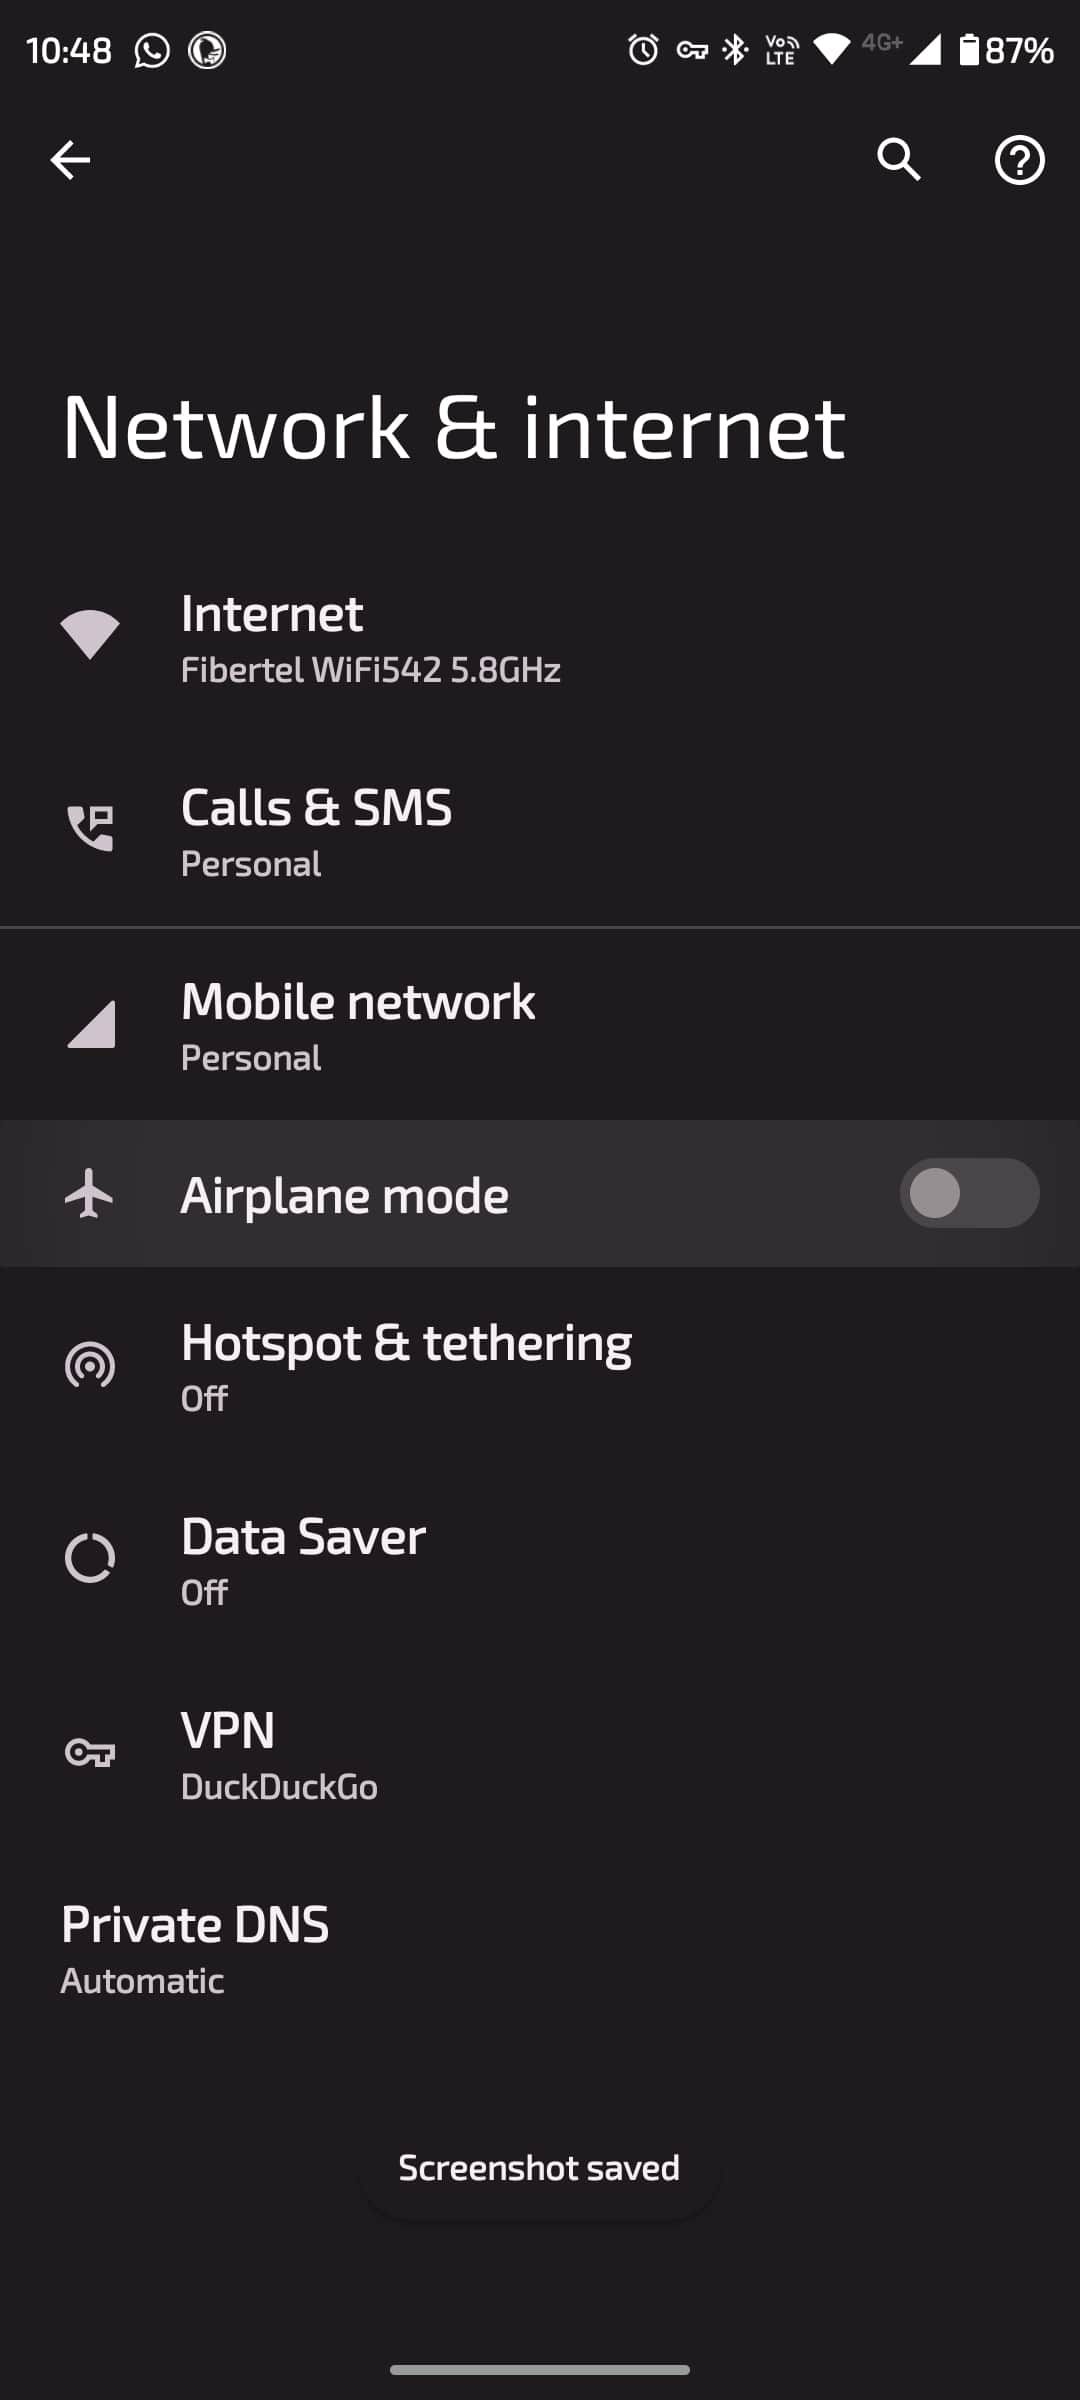 Airplane mode toggled on in settings menu